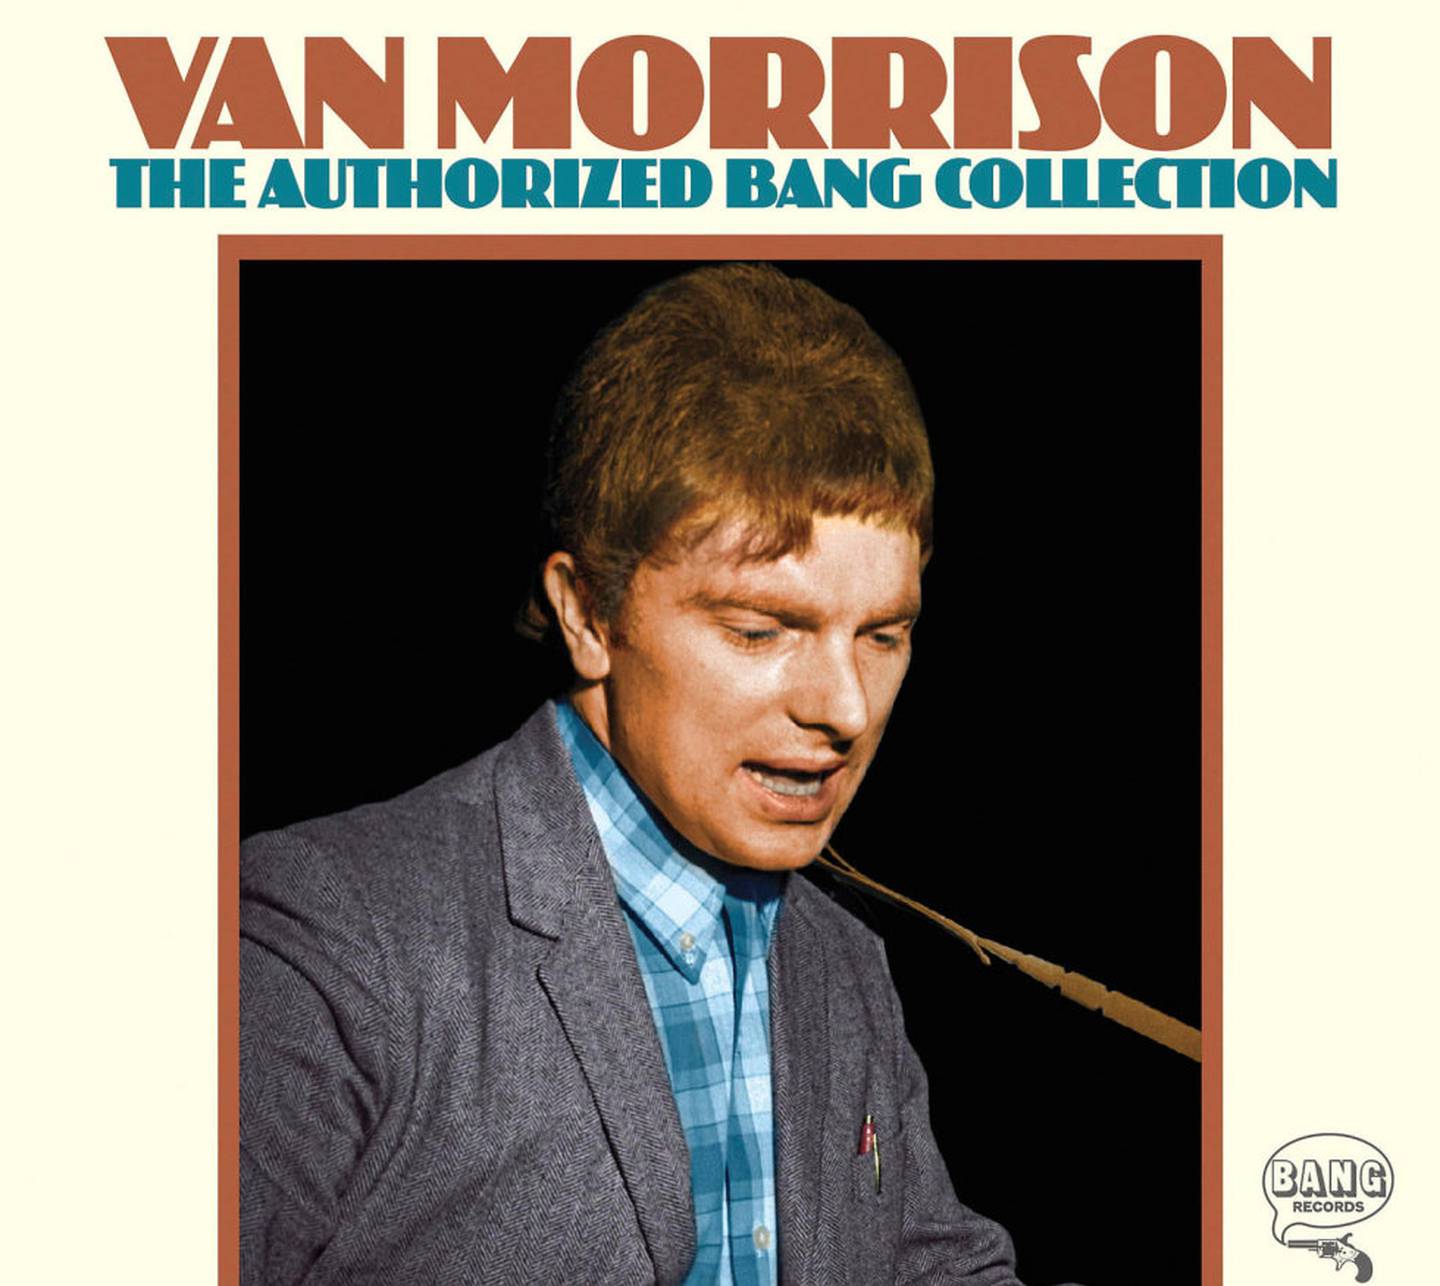 Van Morrison,KUL Anm Musikk B:«The Authorized Bang Collection»
KUL Anm Musikk C:Legacy/Sony